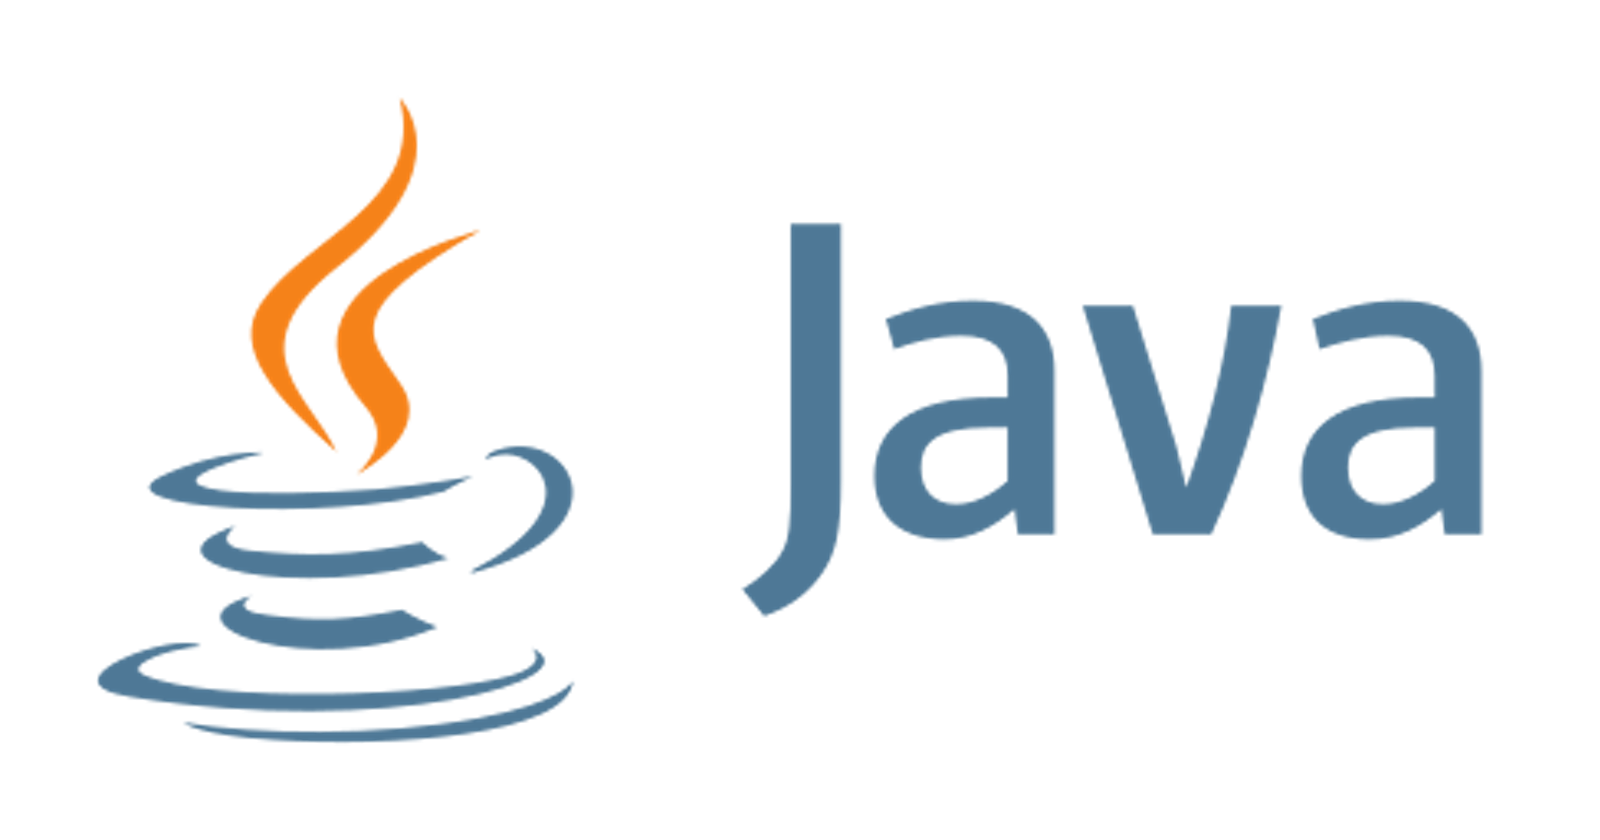 What Makes Java an Evergreen Programming Language?